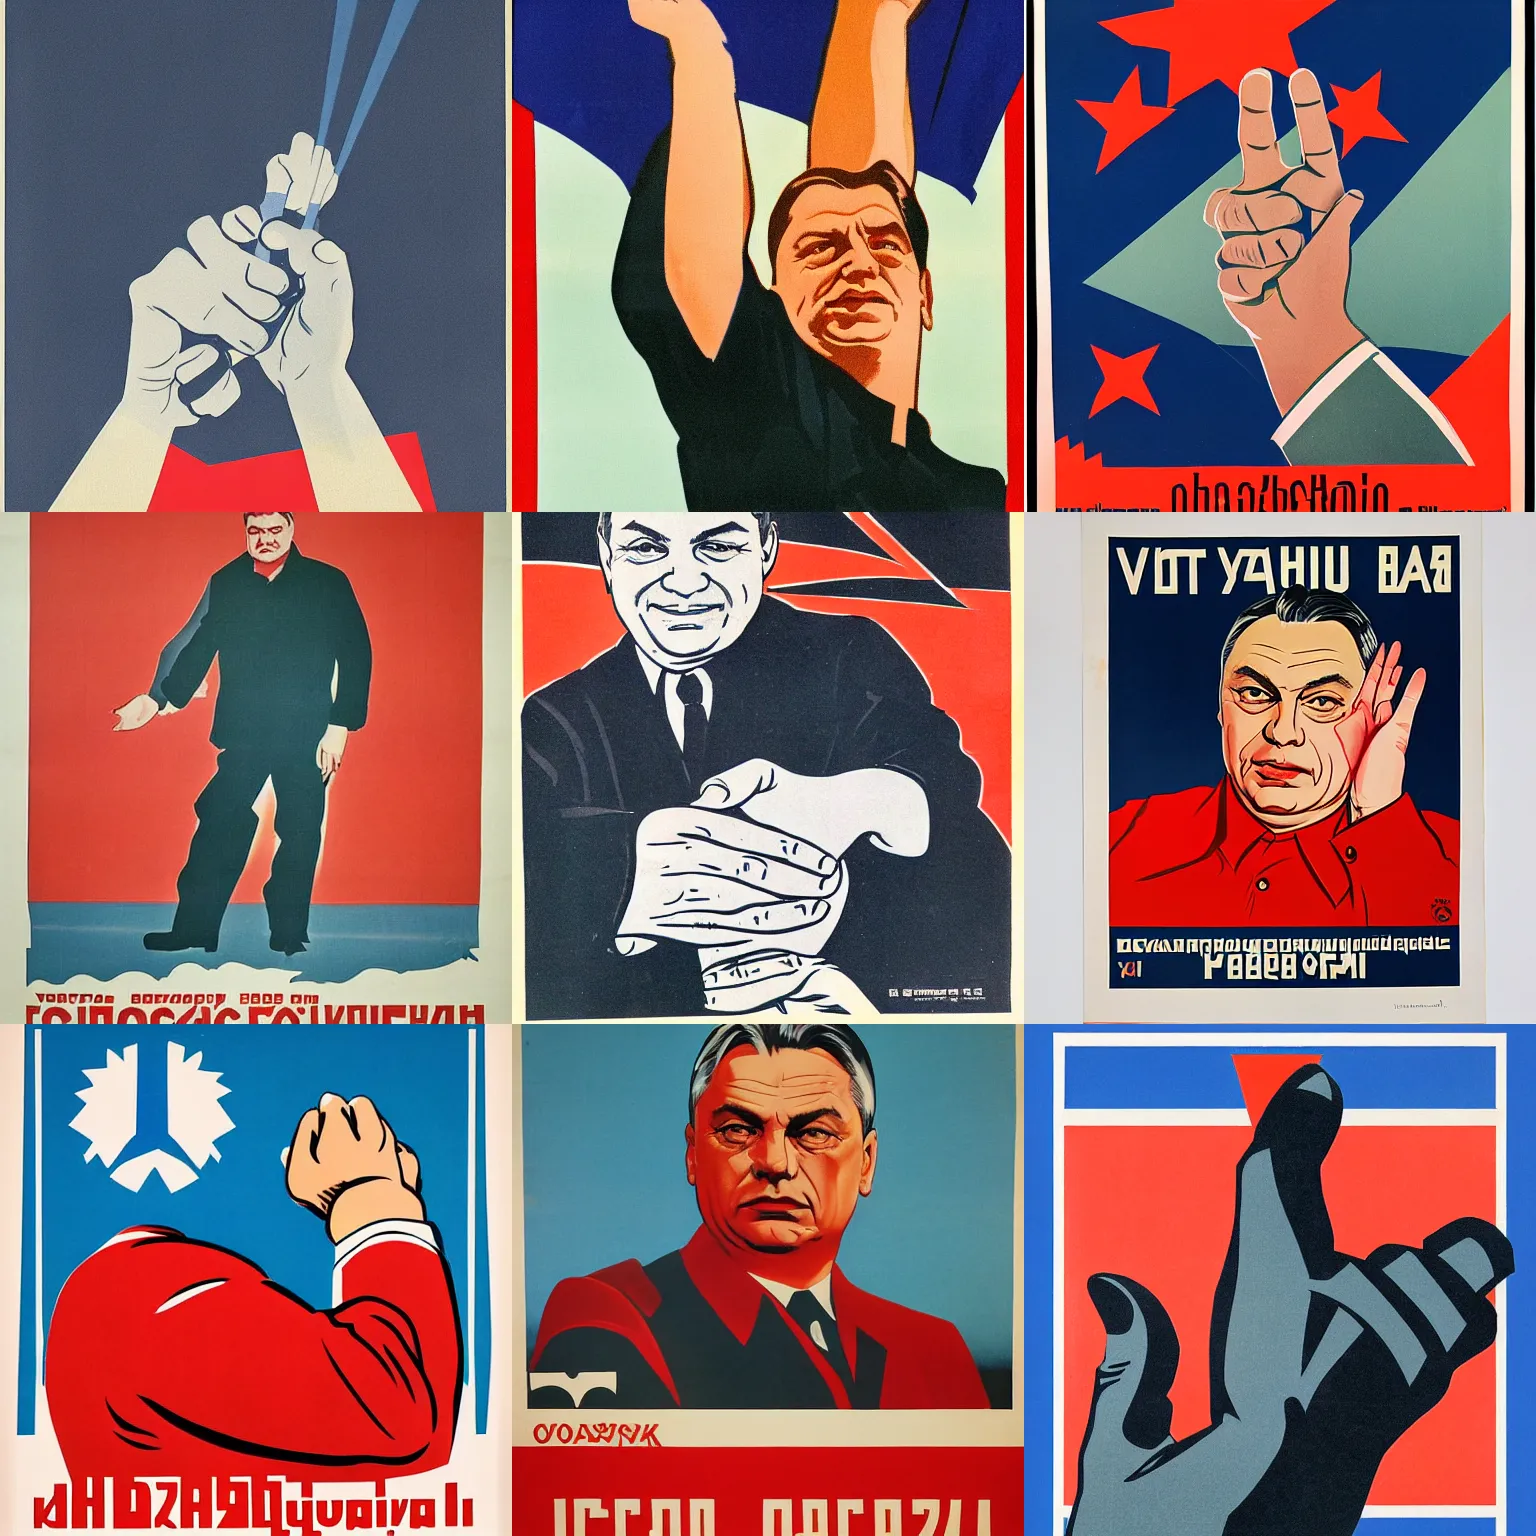 Prompt: soviet propaganda poster of viktor orban holding a hand showing no